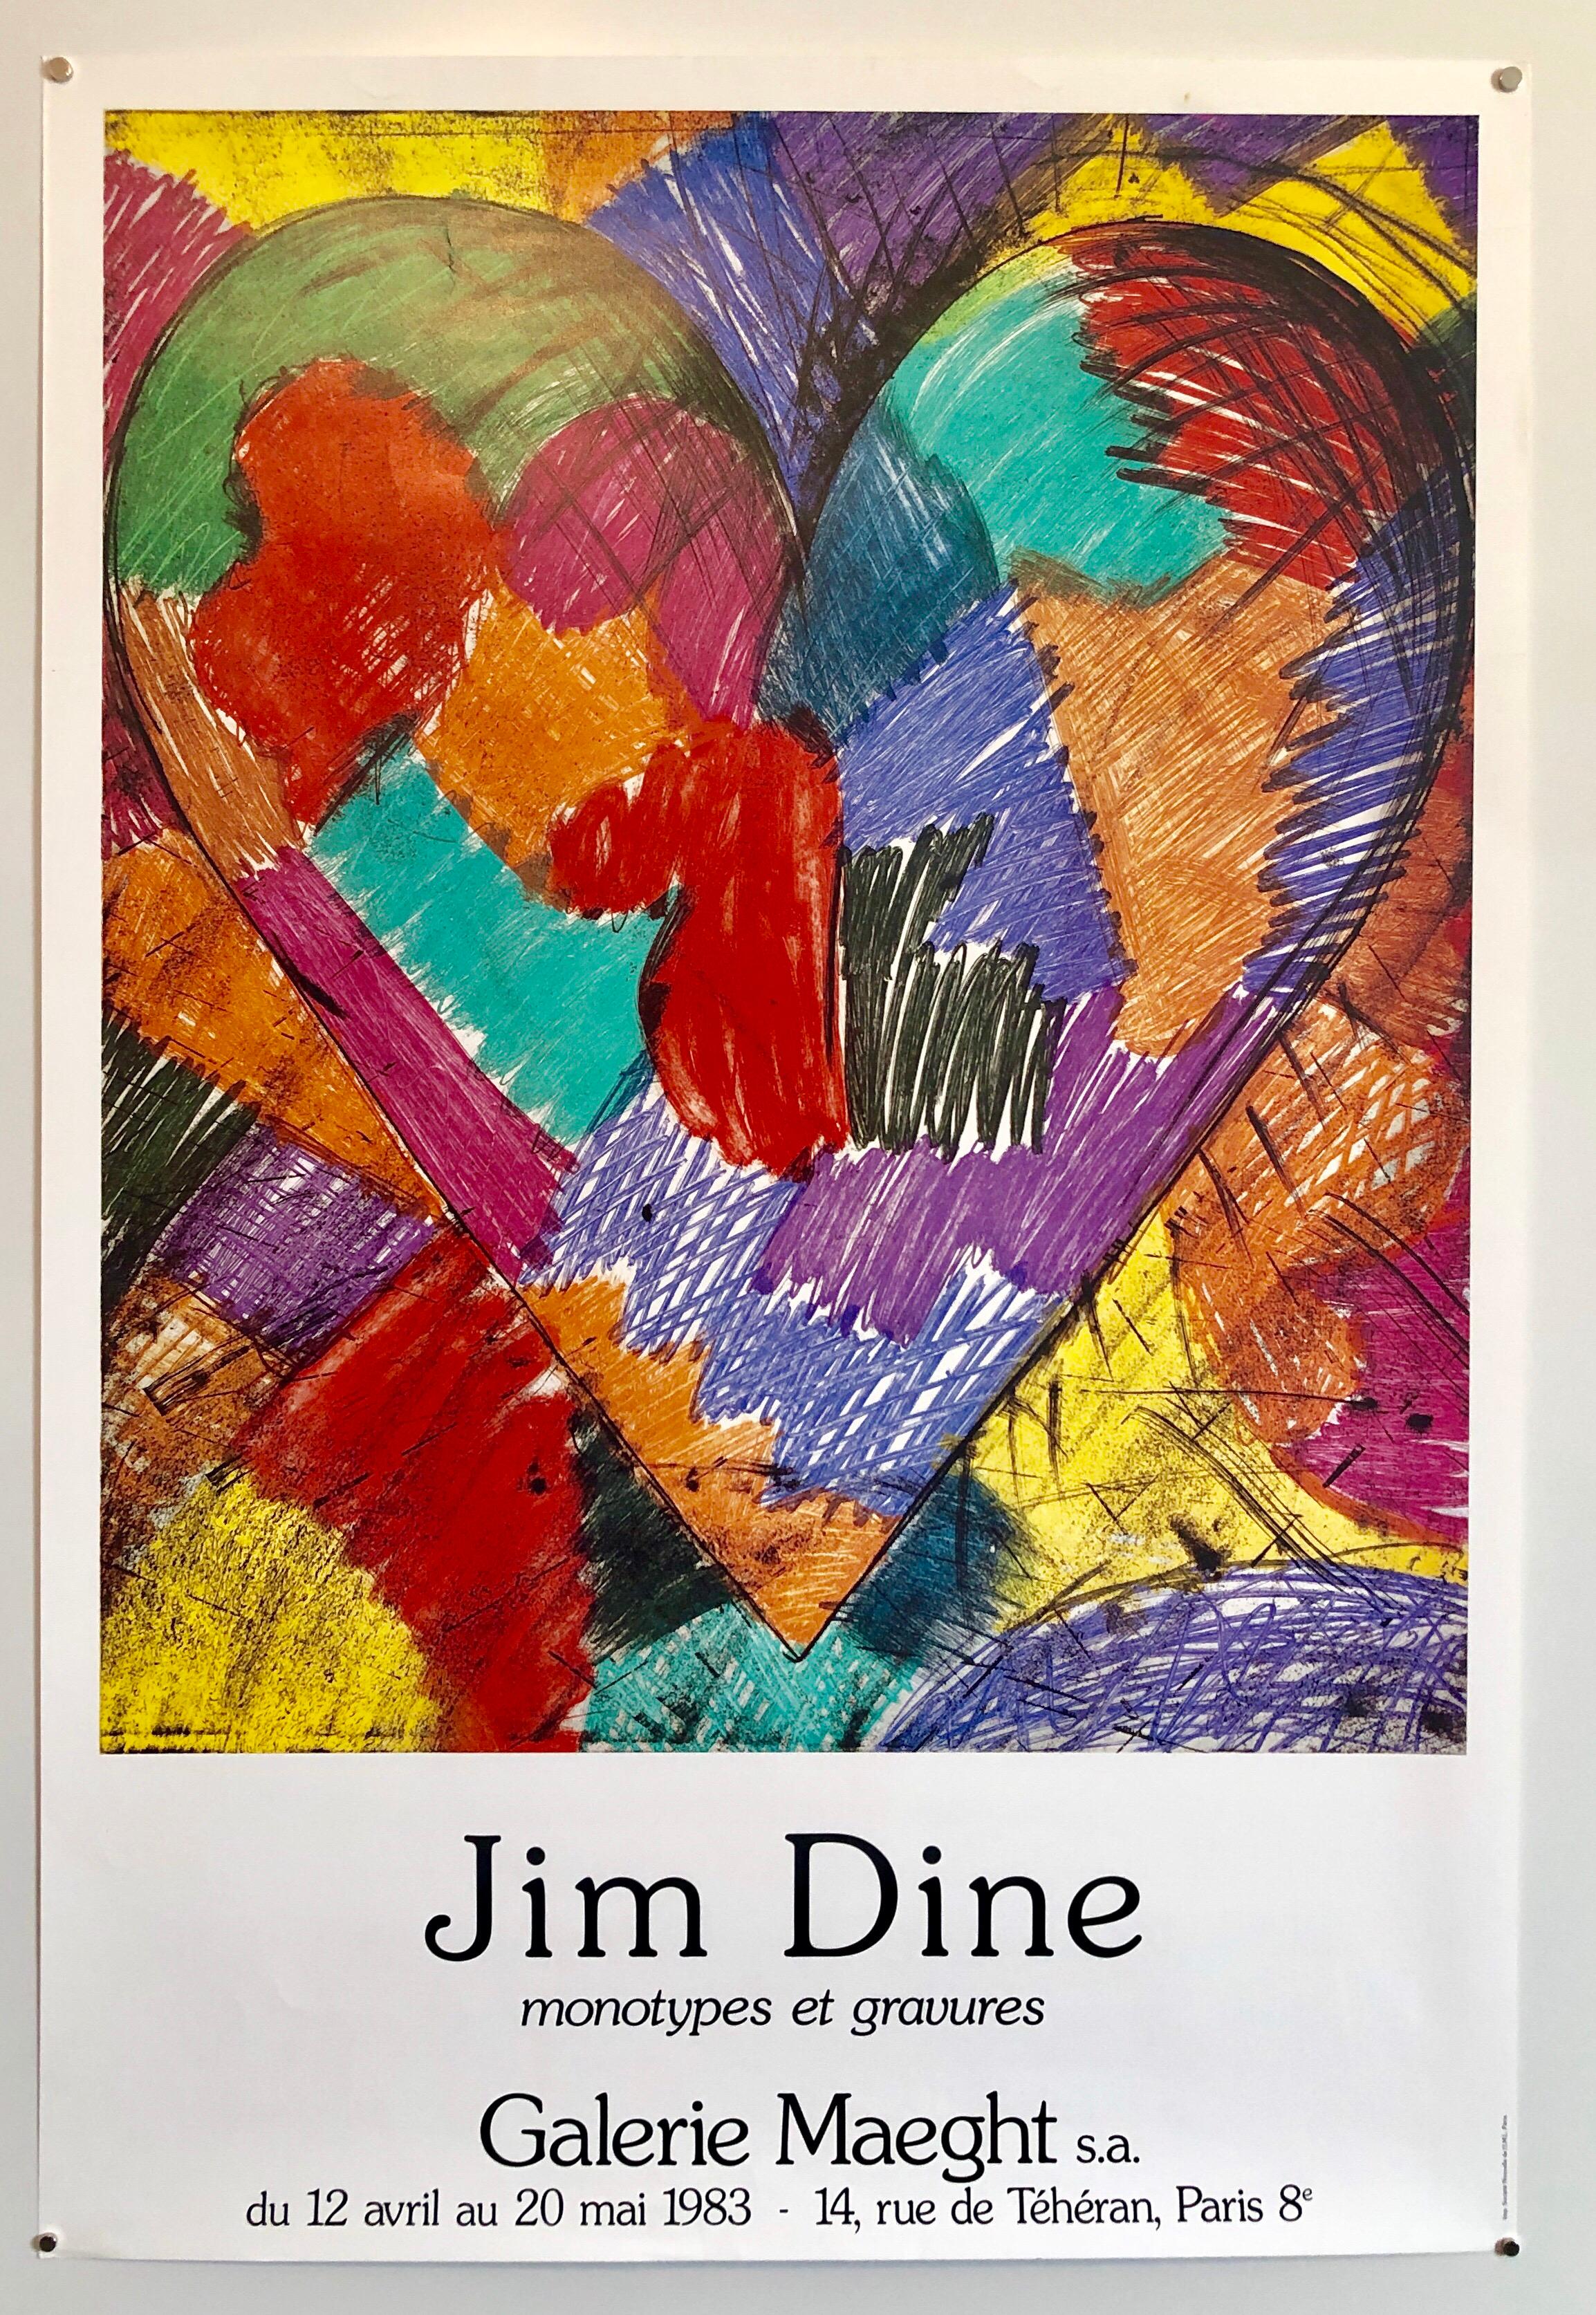  Rainbow Quilt Heart Pop Art Vintage Offset Lithograph Poster Jim Dine, Maeght 1